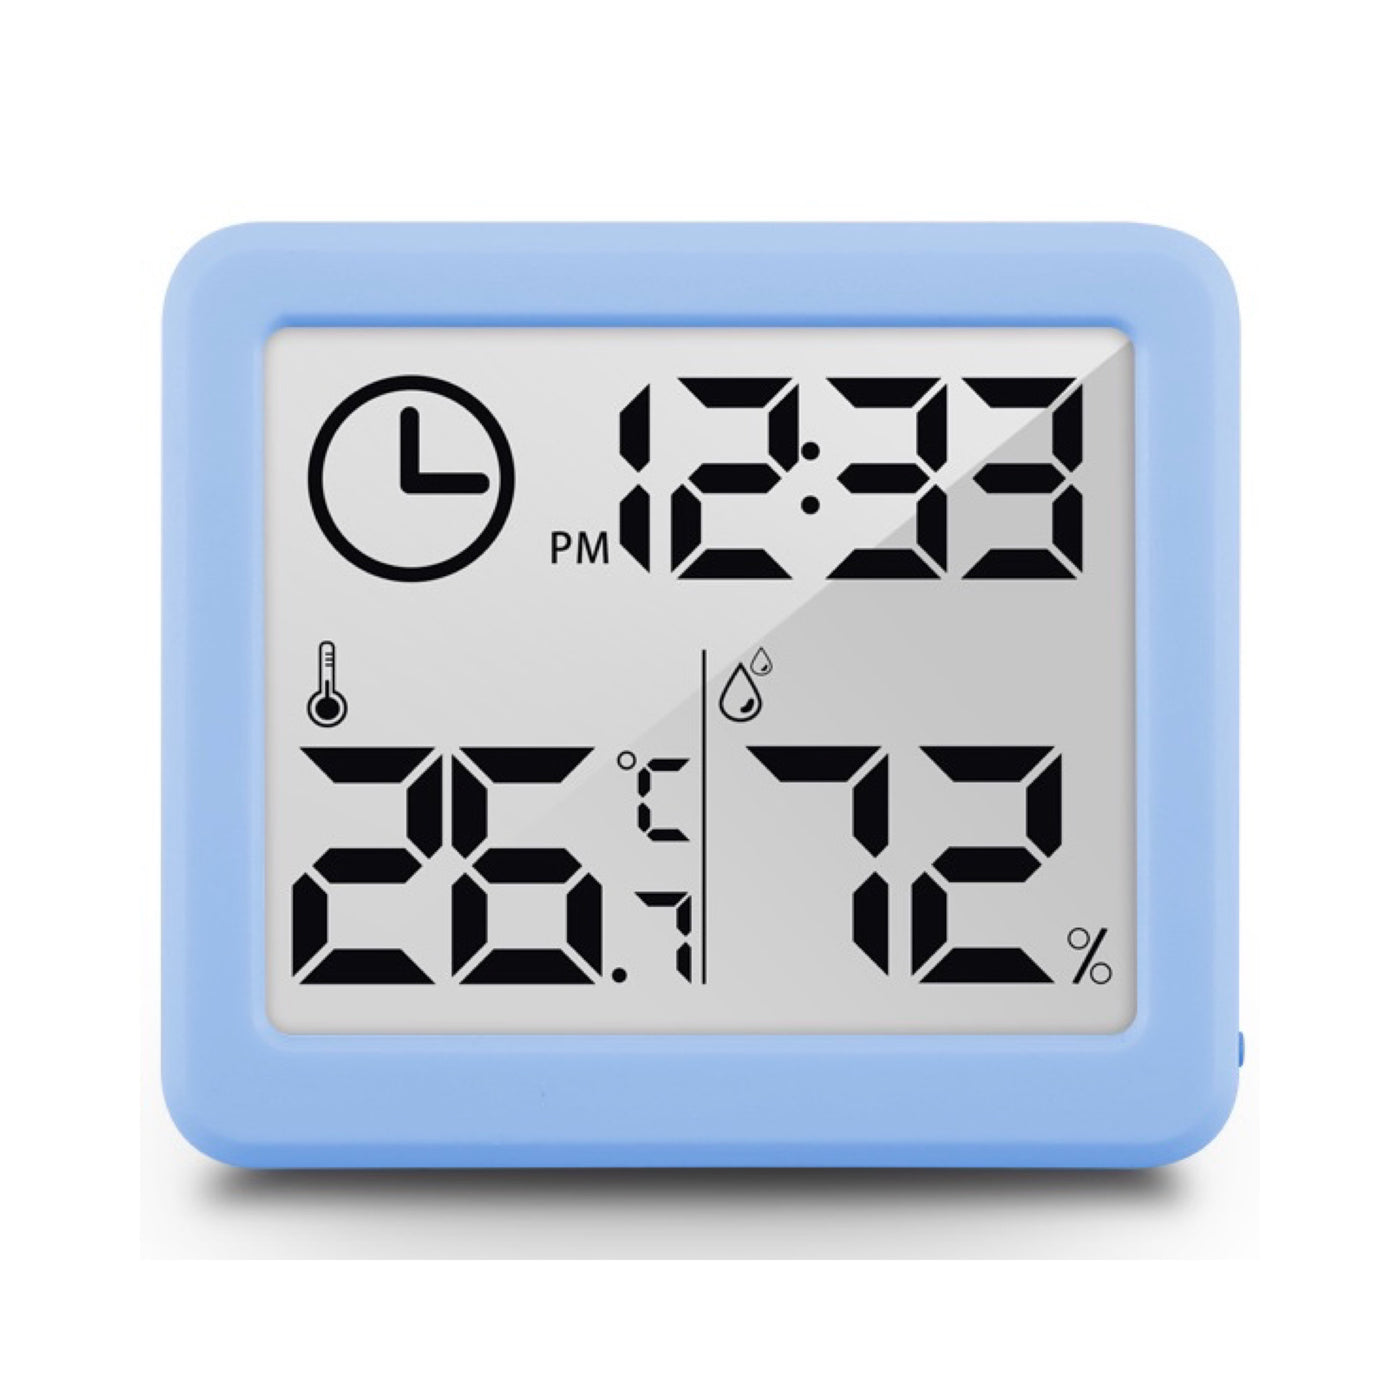 Intelligent temperature and humidity meter